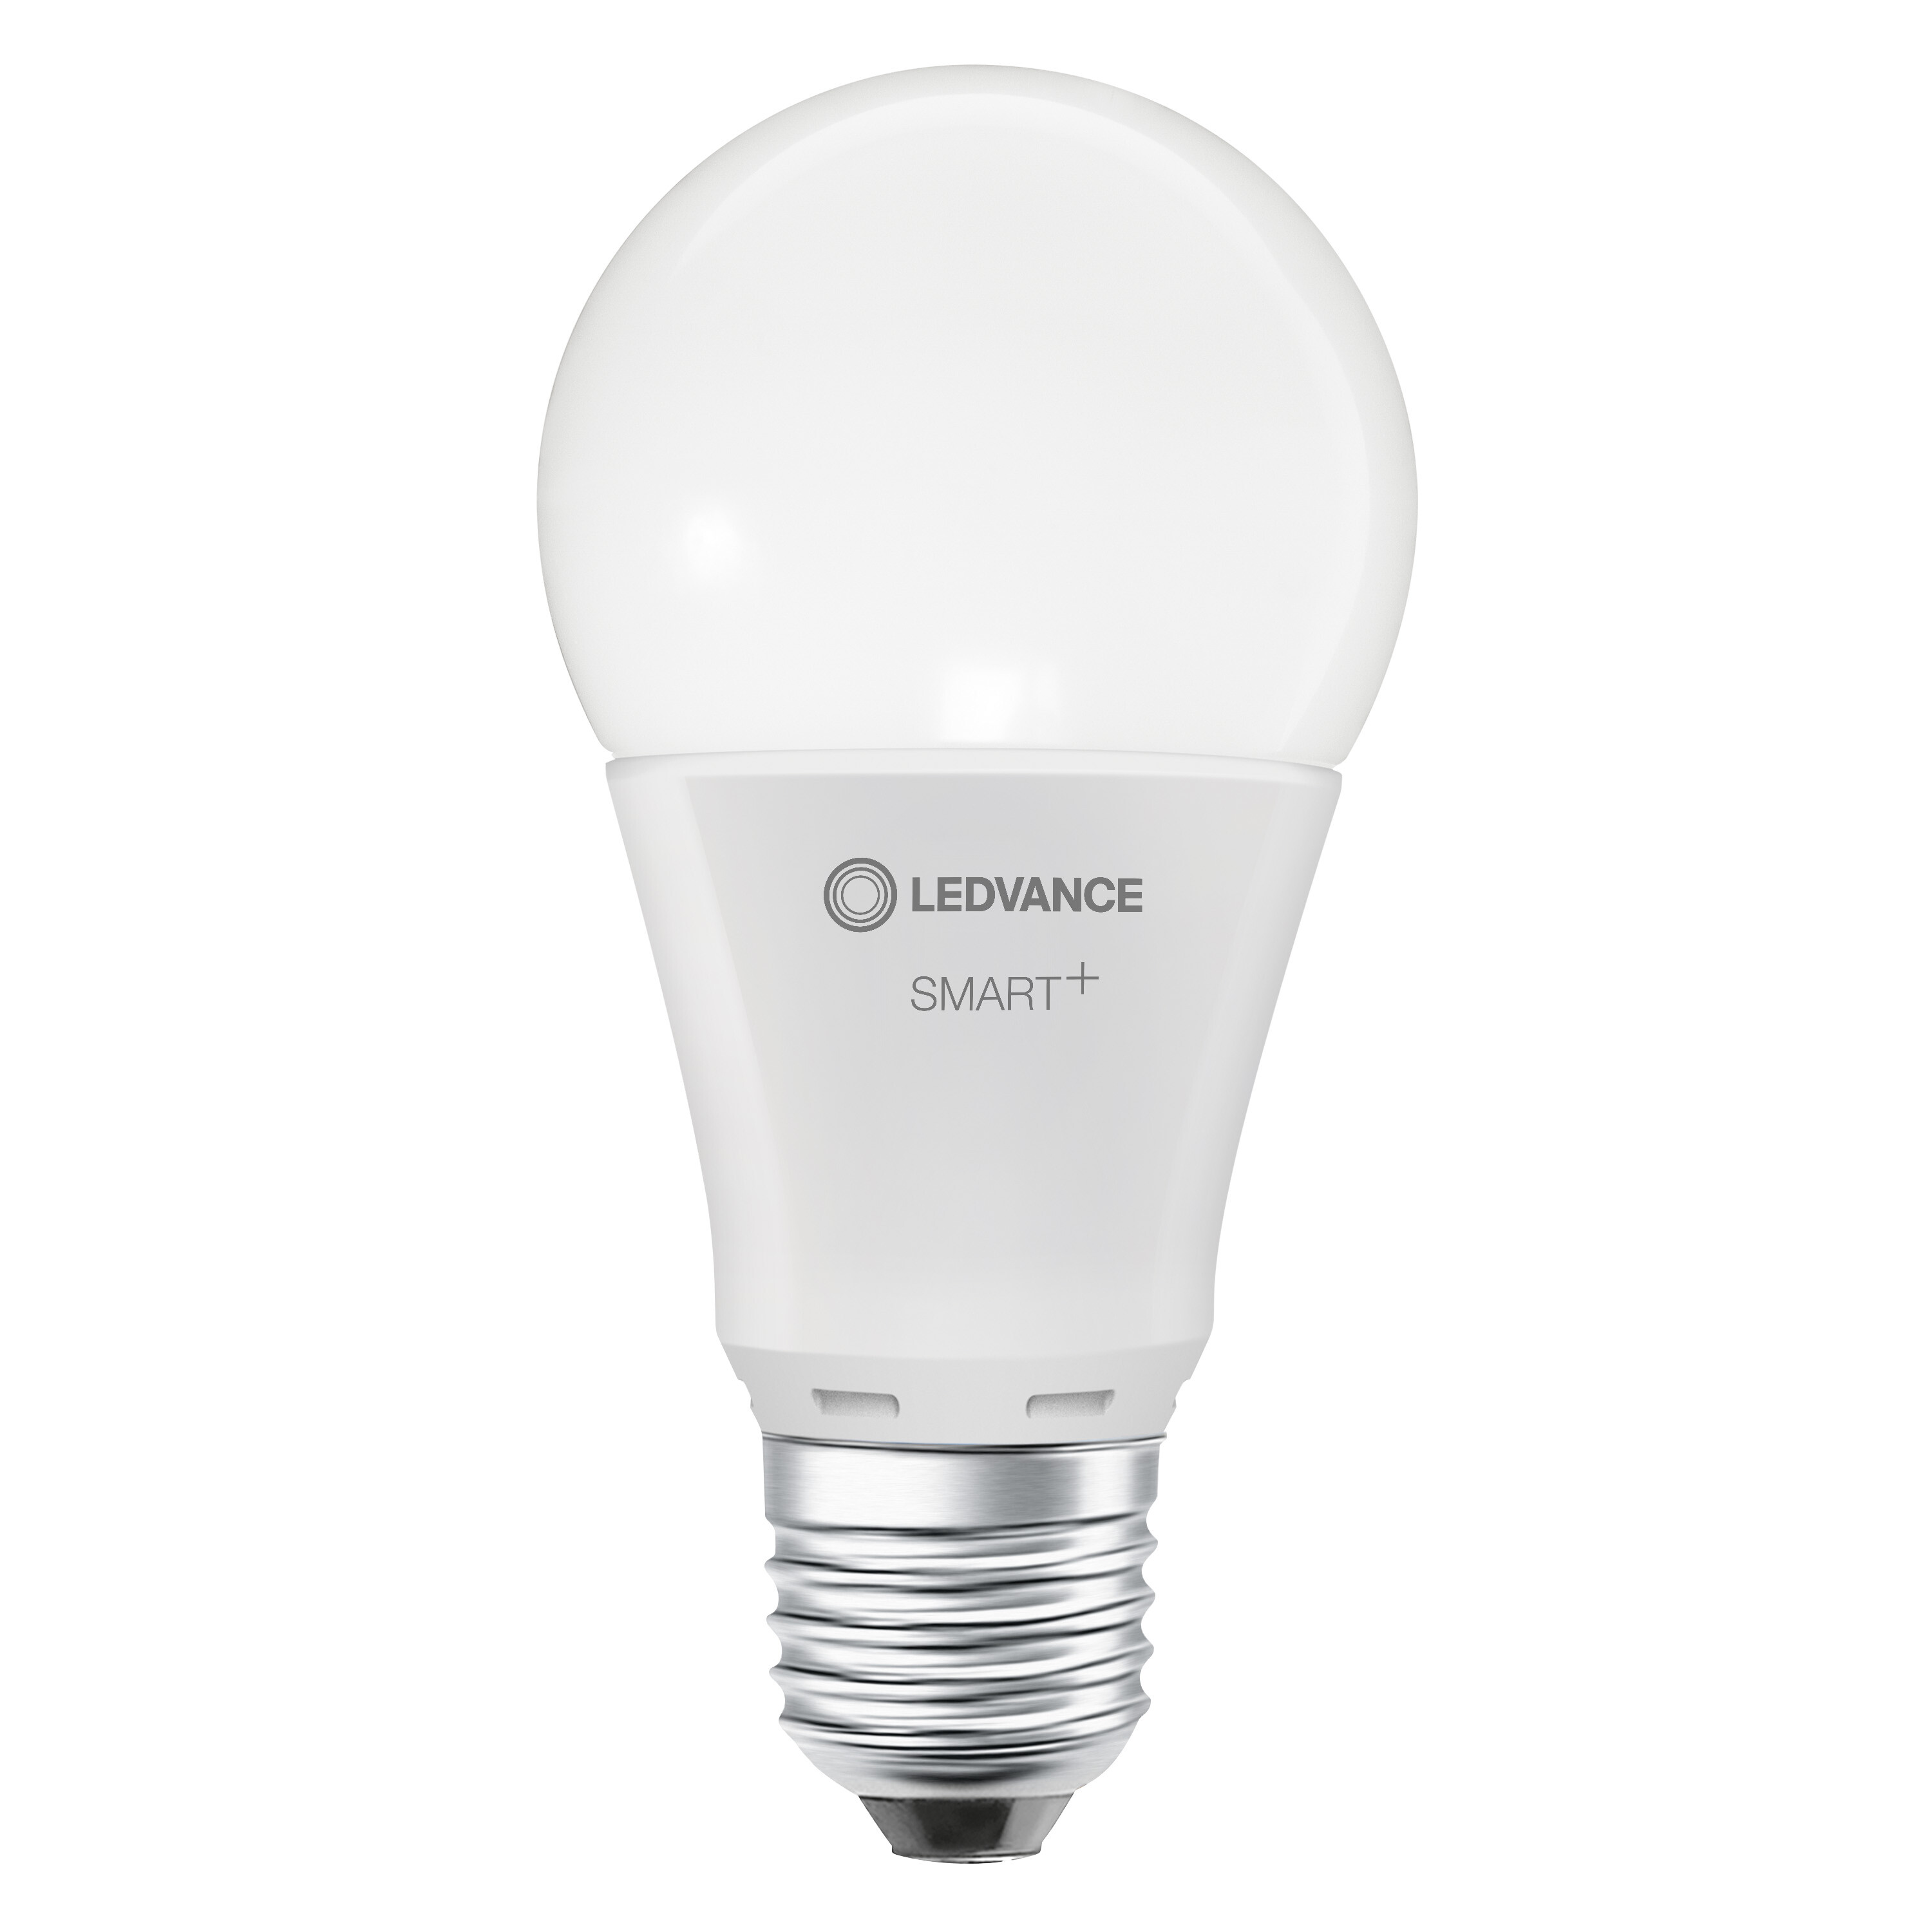 LEDVANCE SMART+ WiFi Classic Tunable Lichtfarbe LED White Lampe änderbar